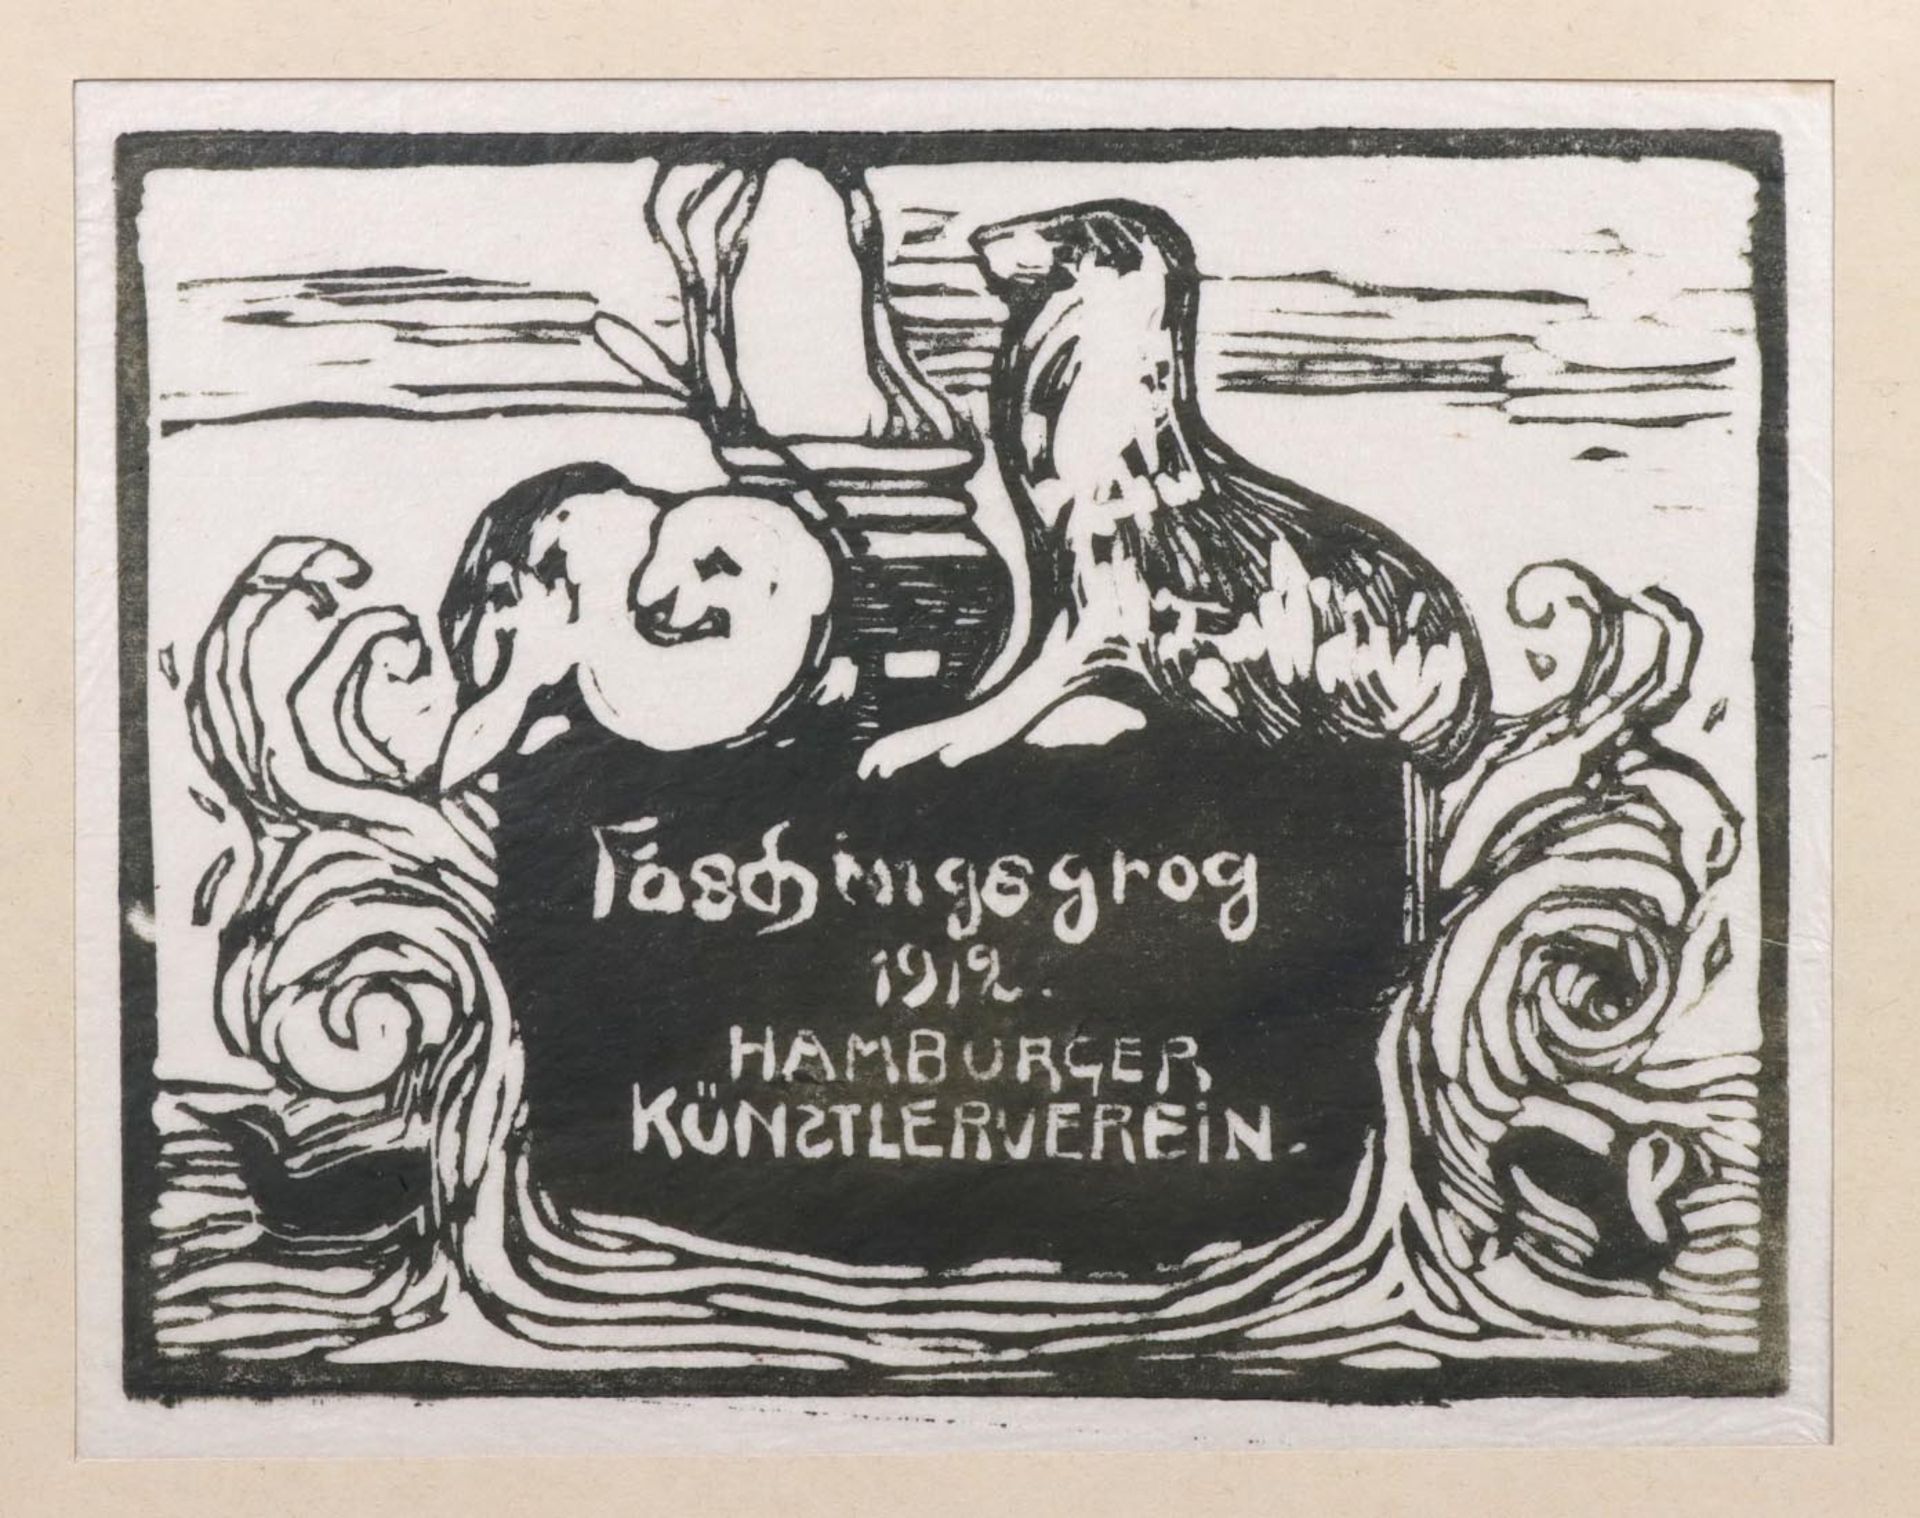 Faschingsgrog 1912 - Hambuger Künstlerverein - Image 2 of 2